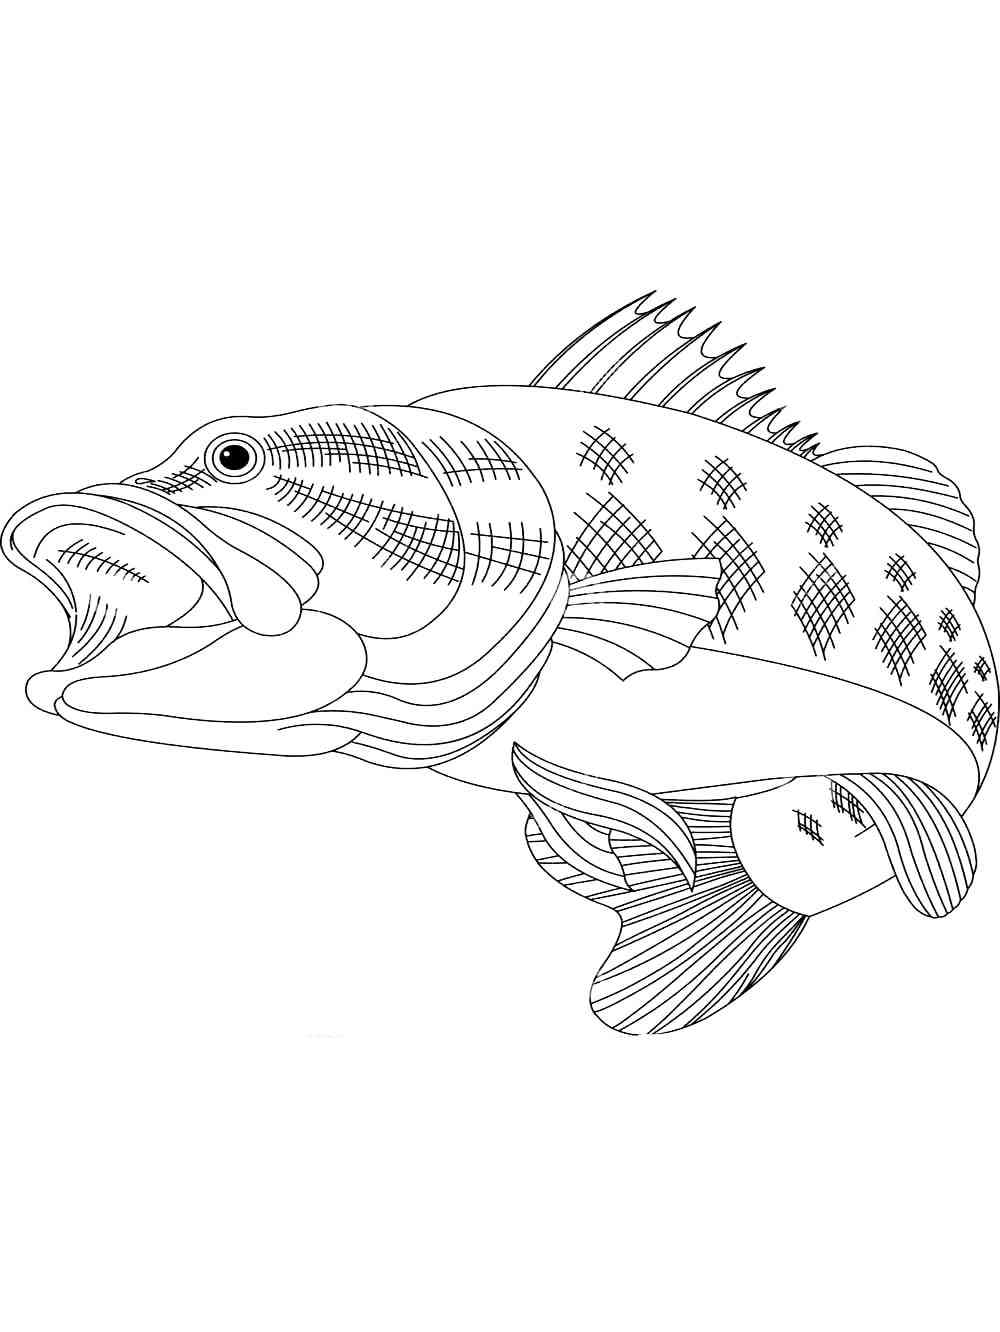 Bass Fish 8 coloring page